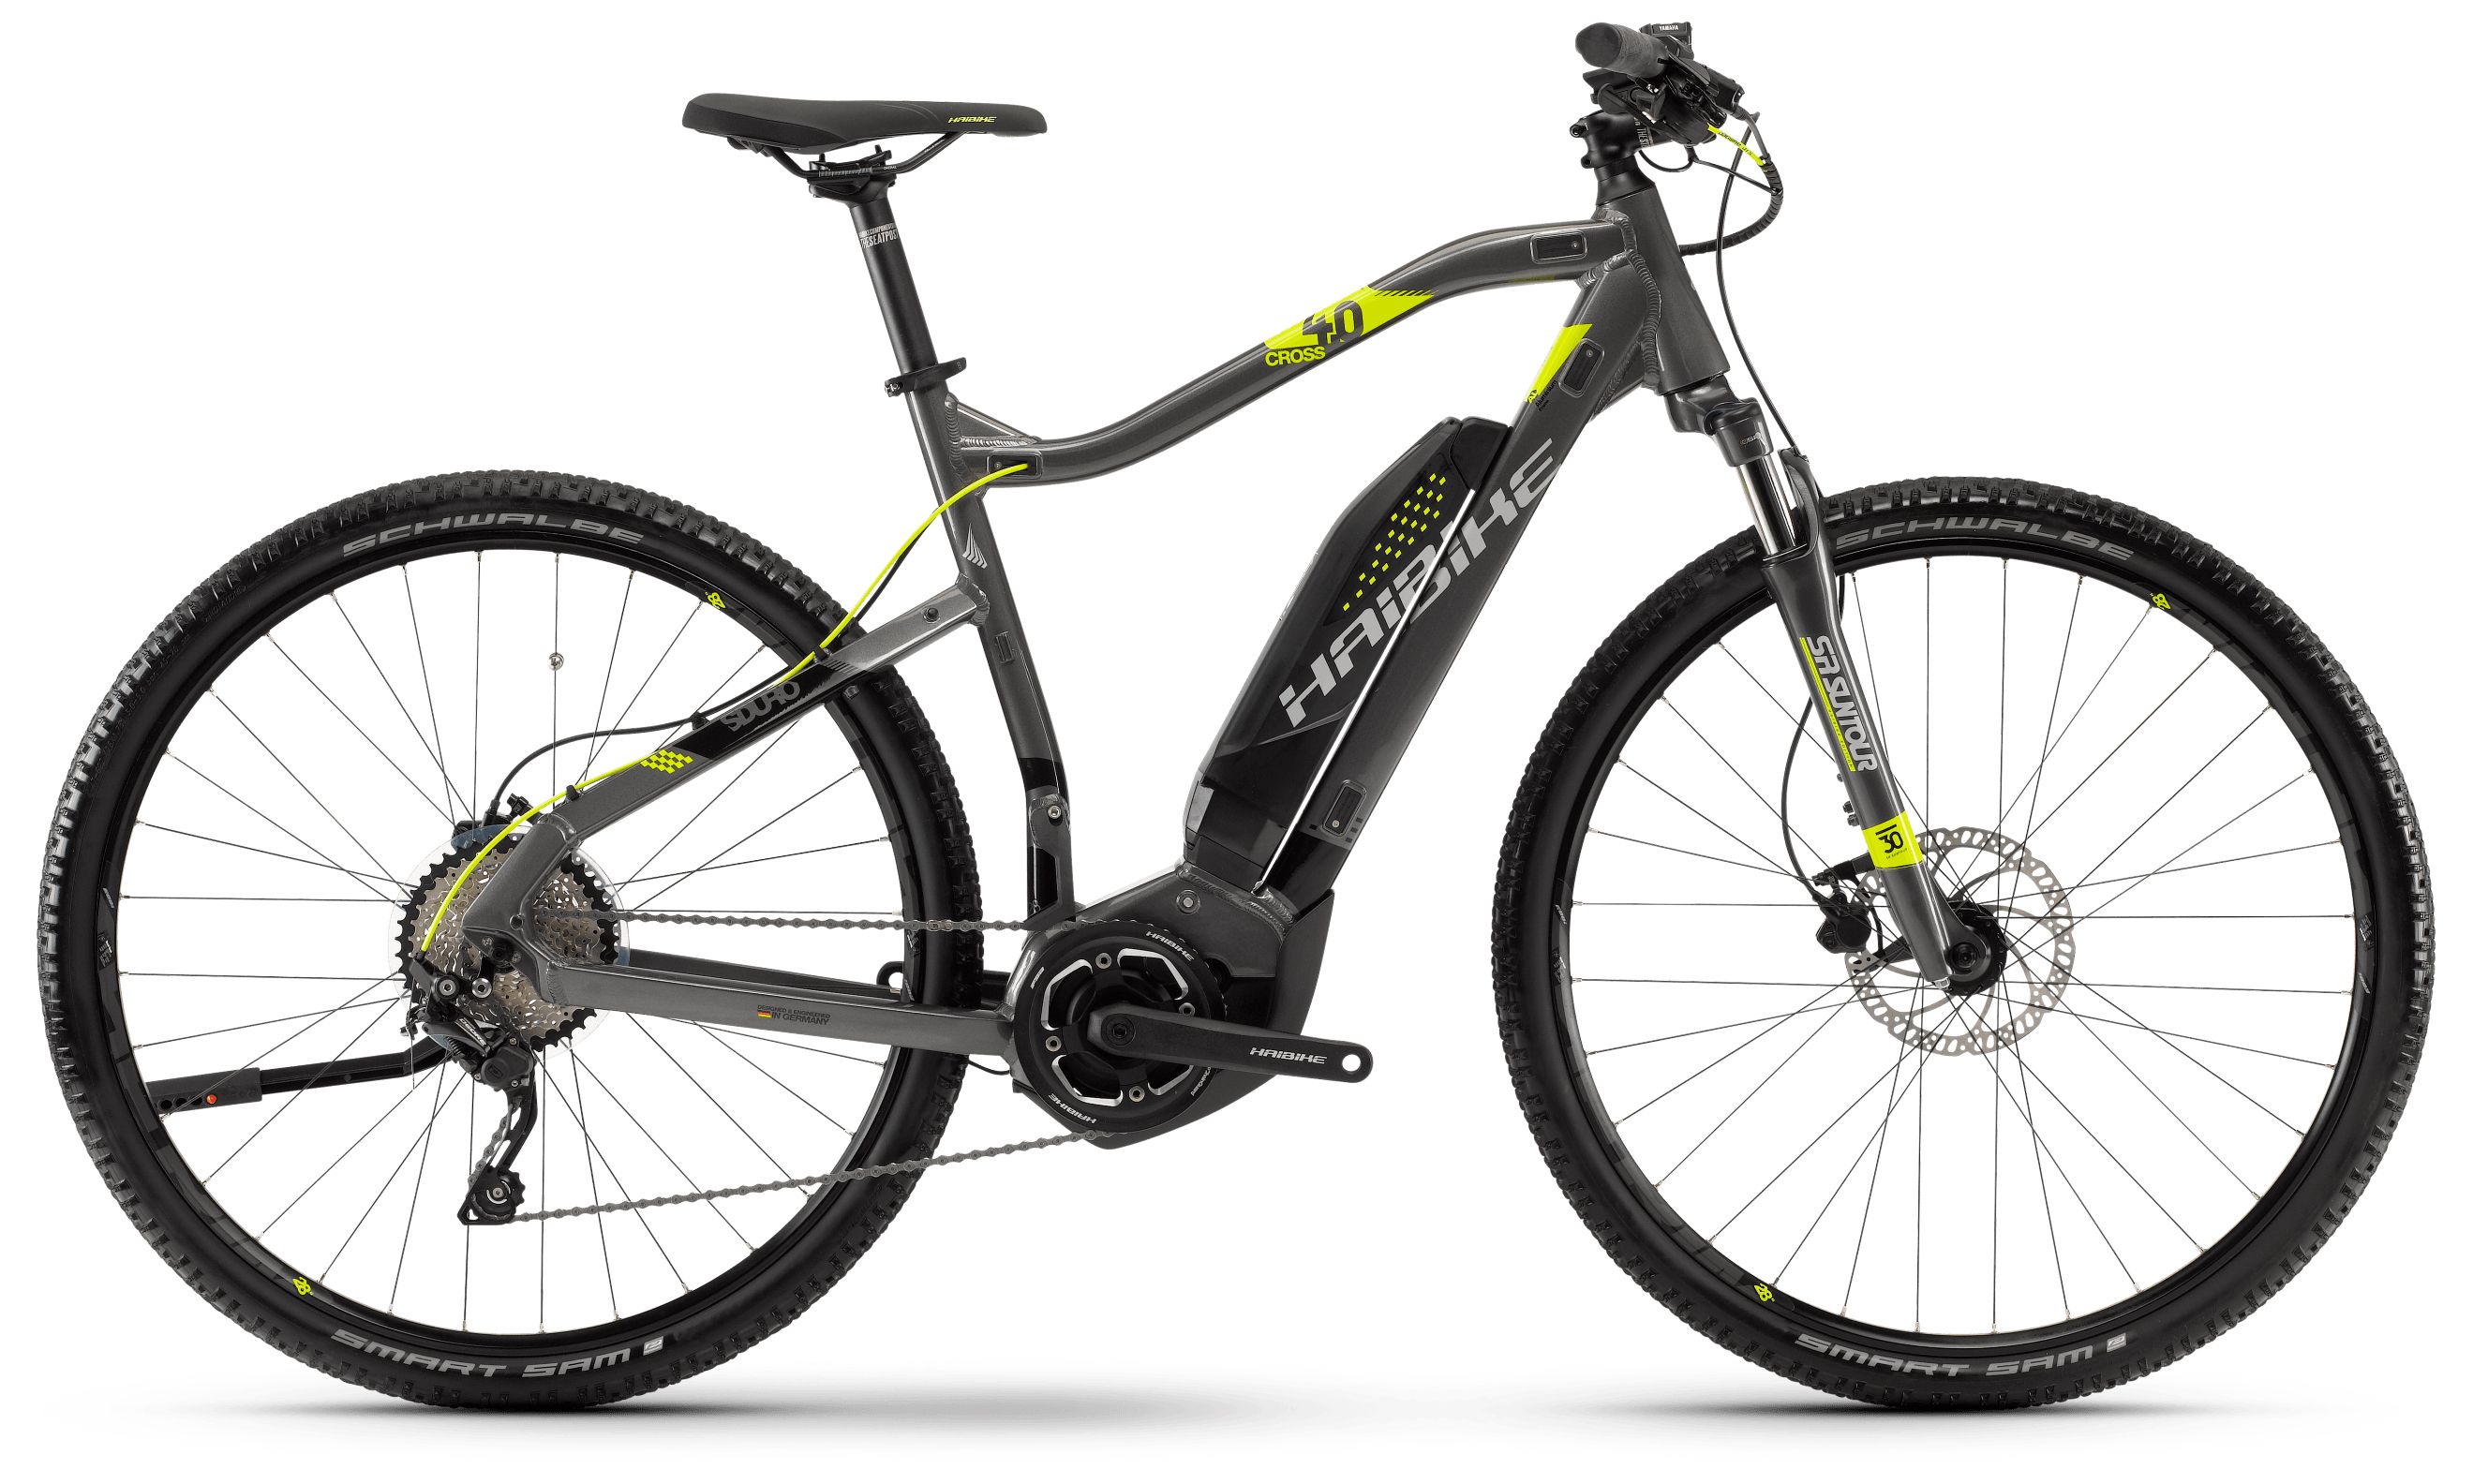  Велосипед Haibike Sduro Cross 4.0 men 400Wh 10s Deore 2018